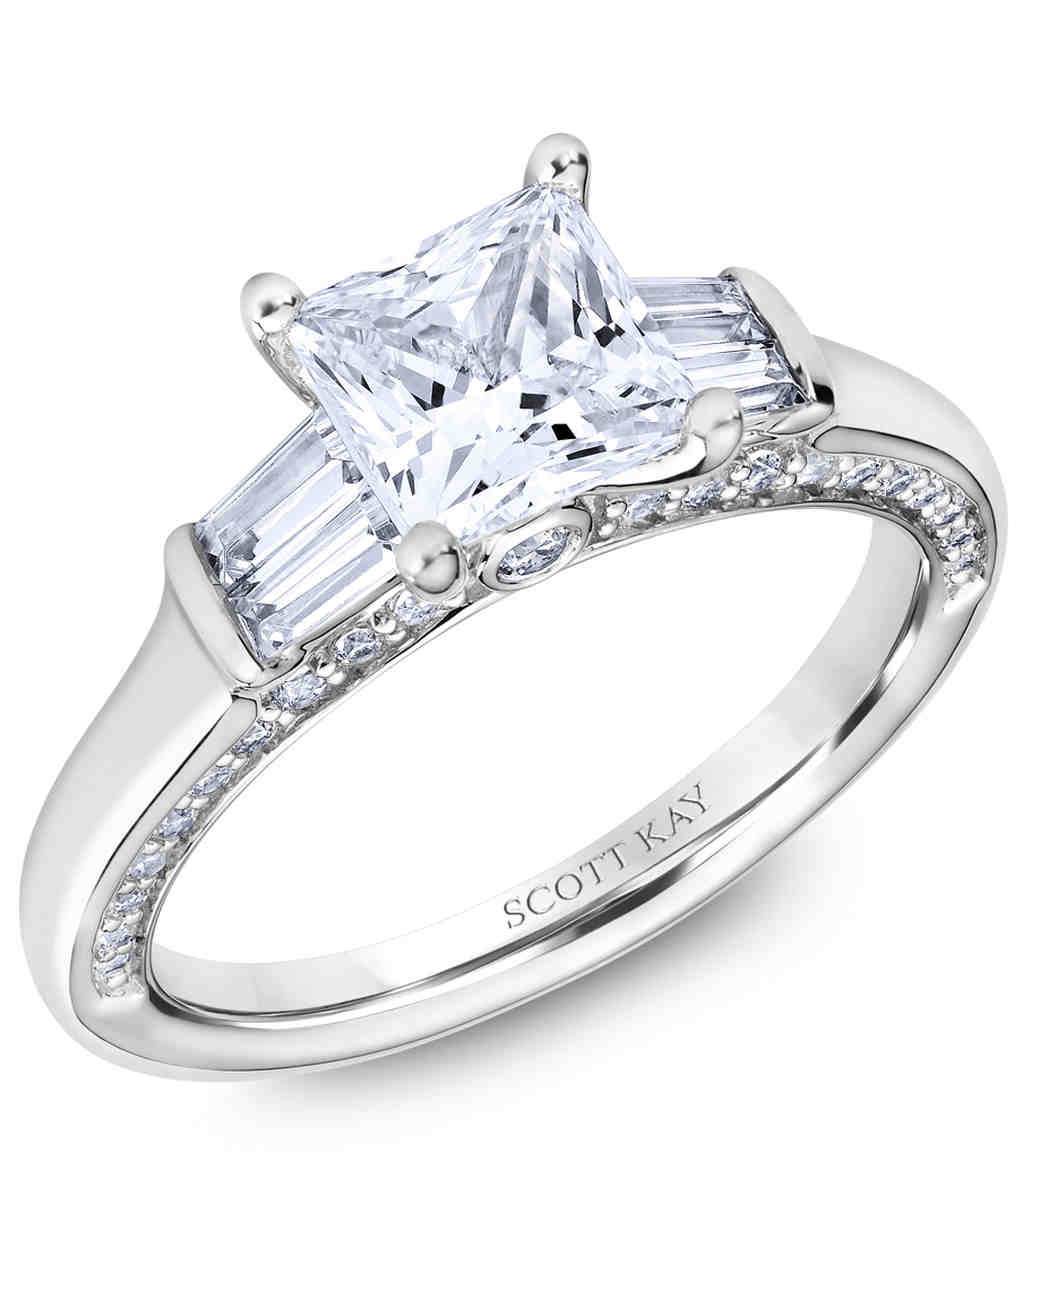 Princess Cut Wedding Ring
 30 Princess Cut Diamond Engagement Rings We Love